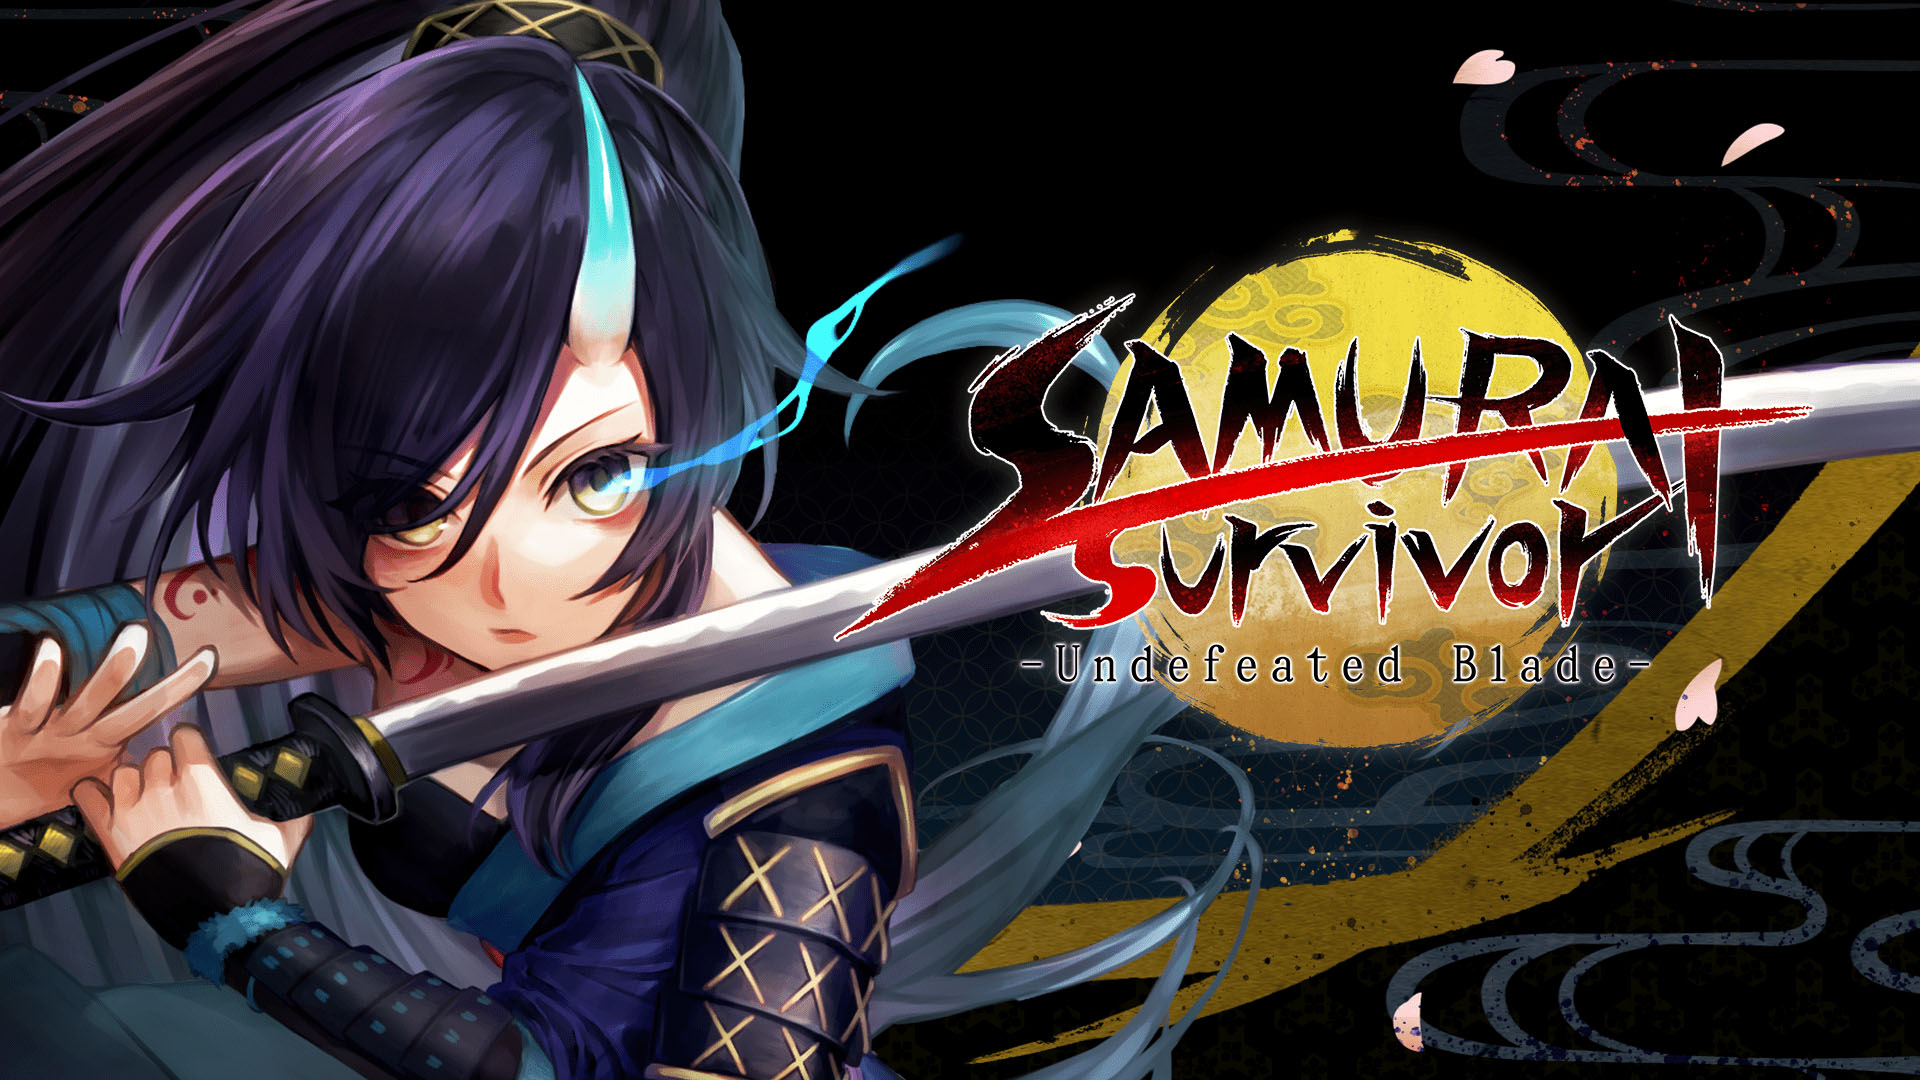 SAMURAI Survivor -Undefeated Blade download the last version for apple